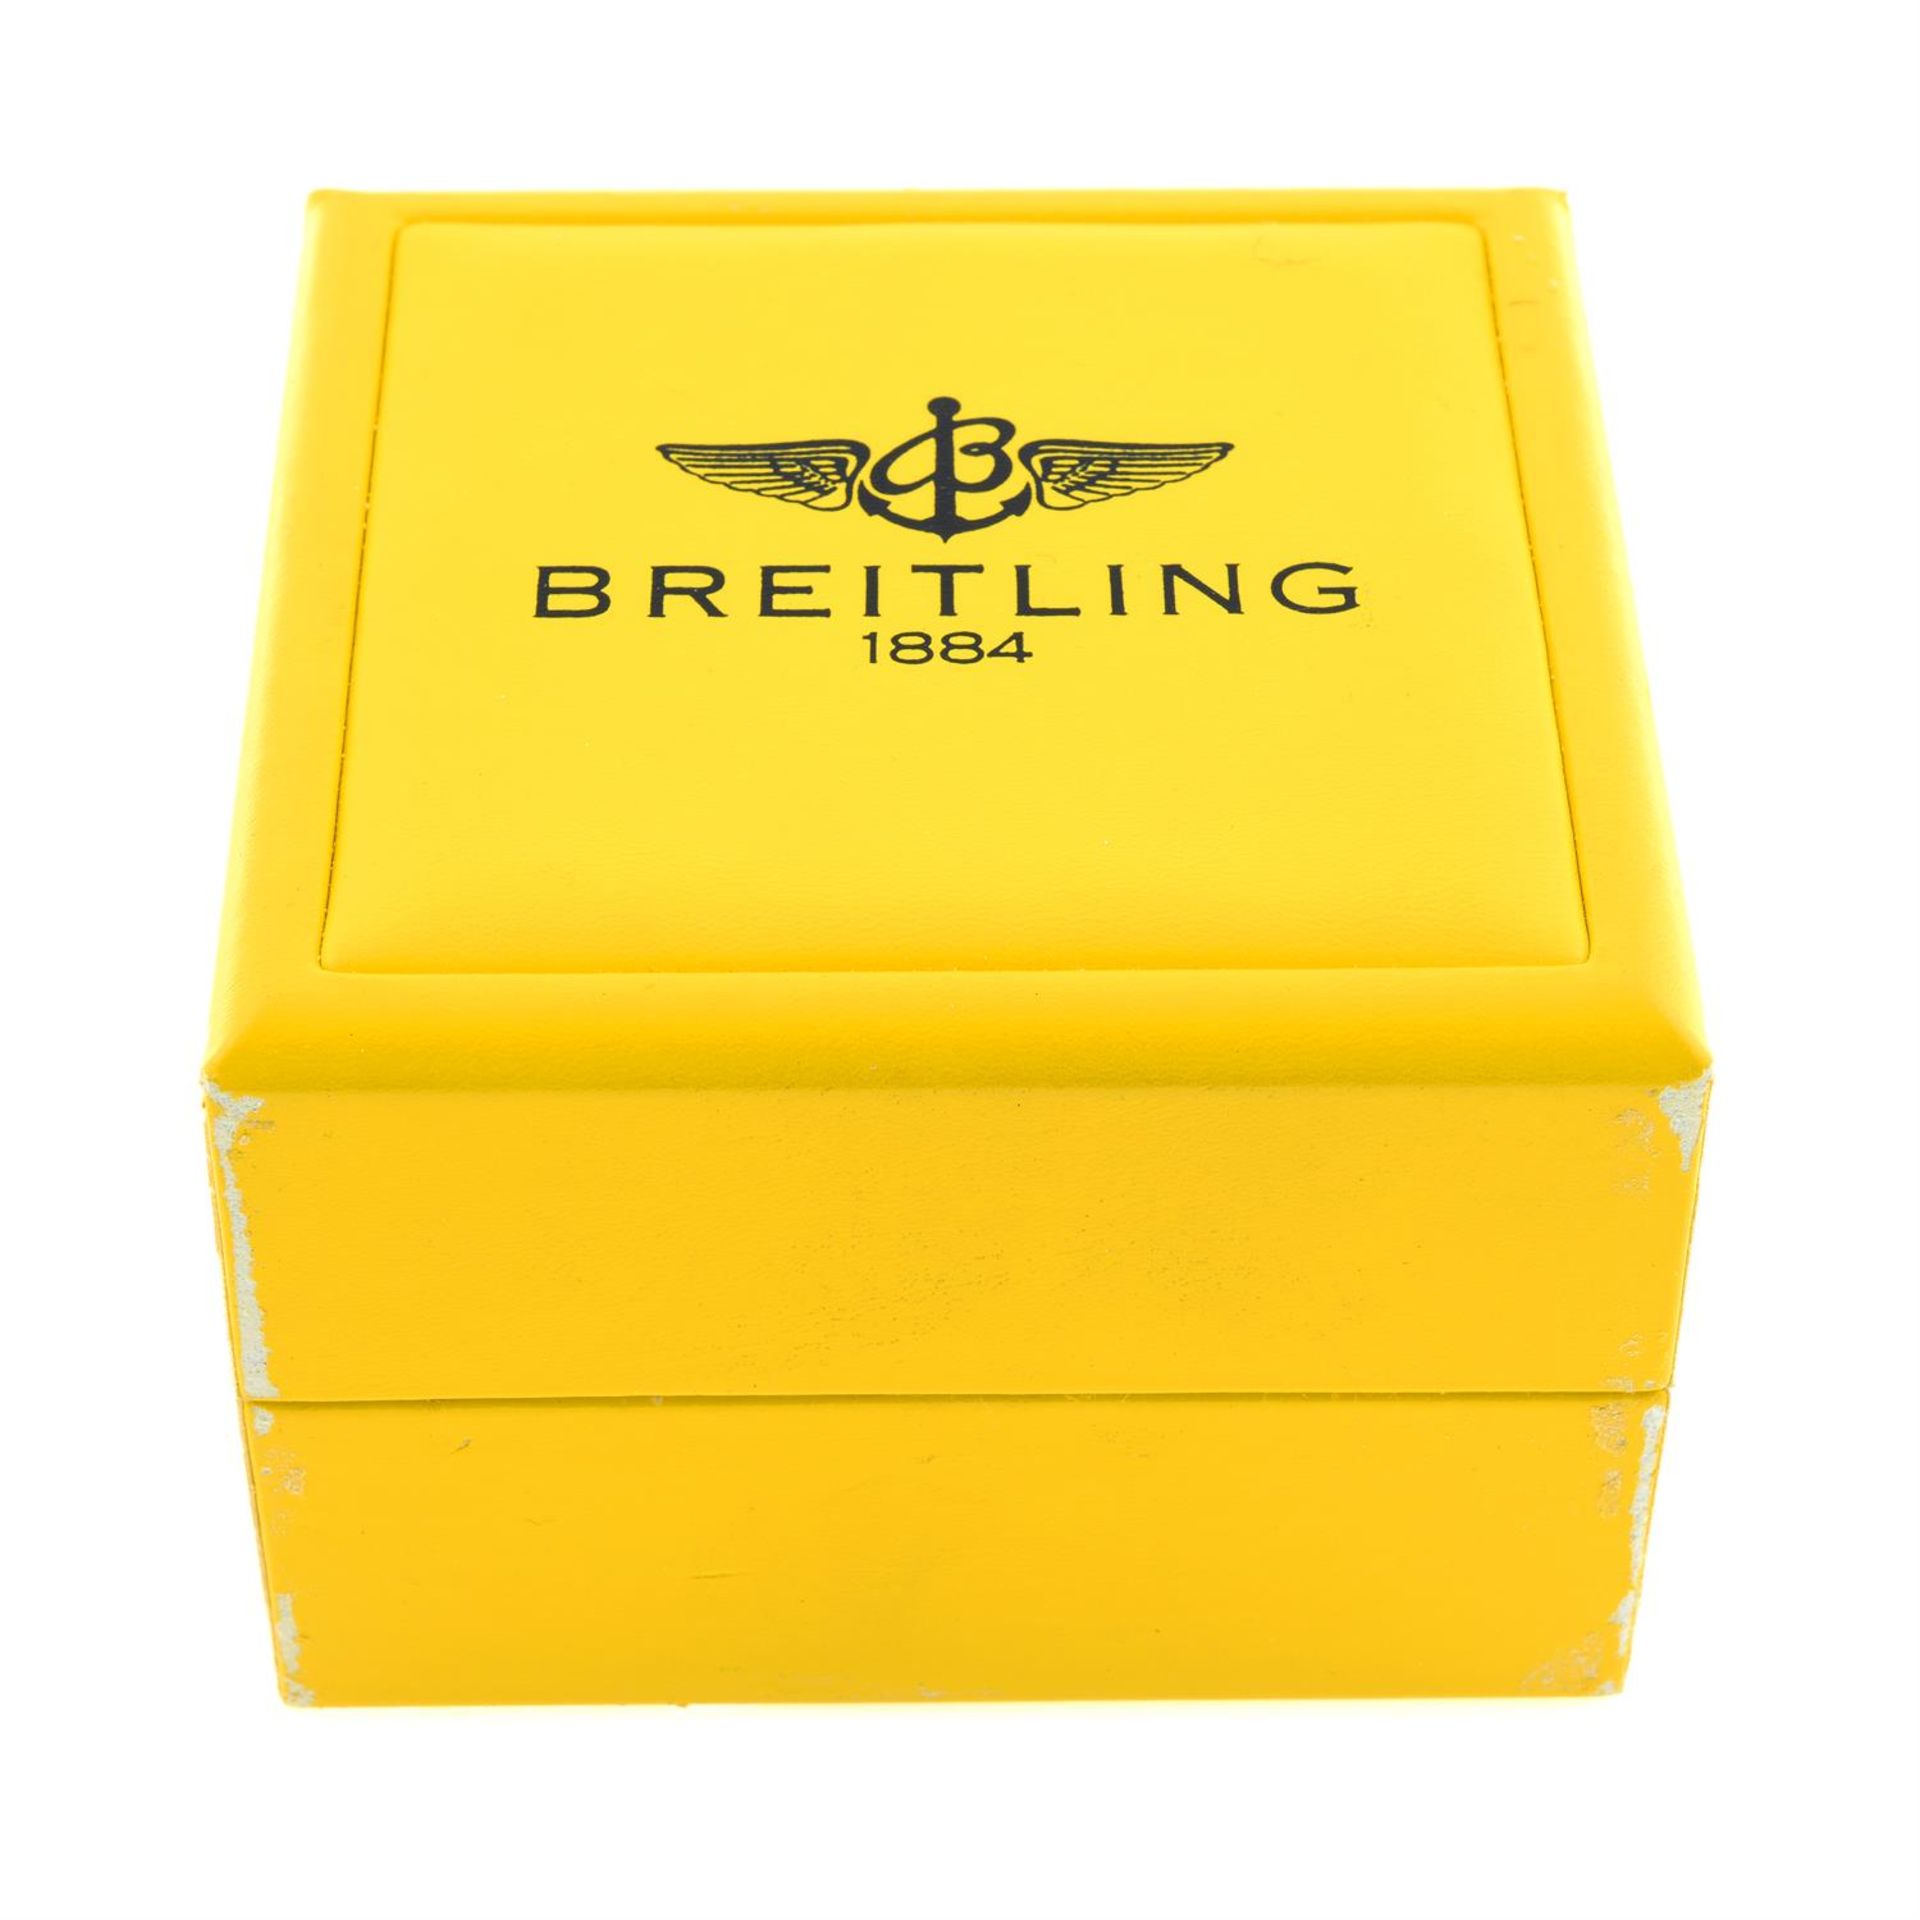 BREITLING - a titanium Aerospace bracelet watch. 40mm. - Image 5 of 6